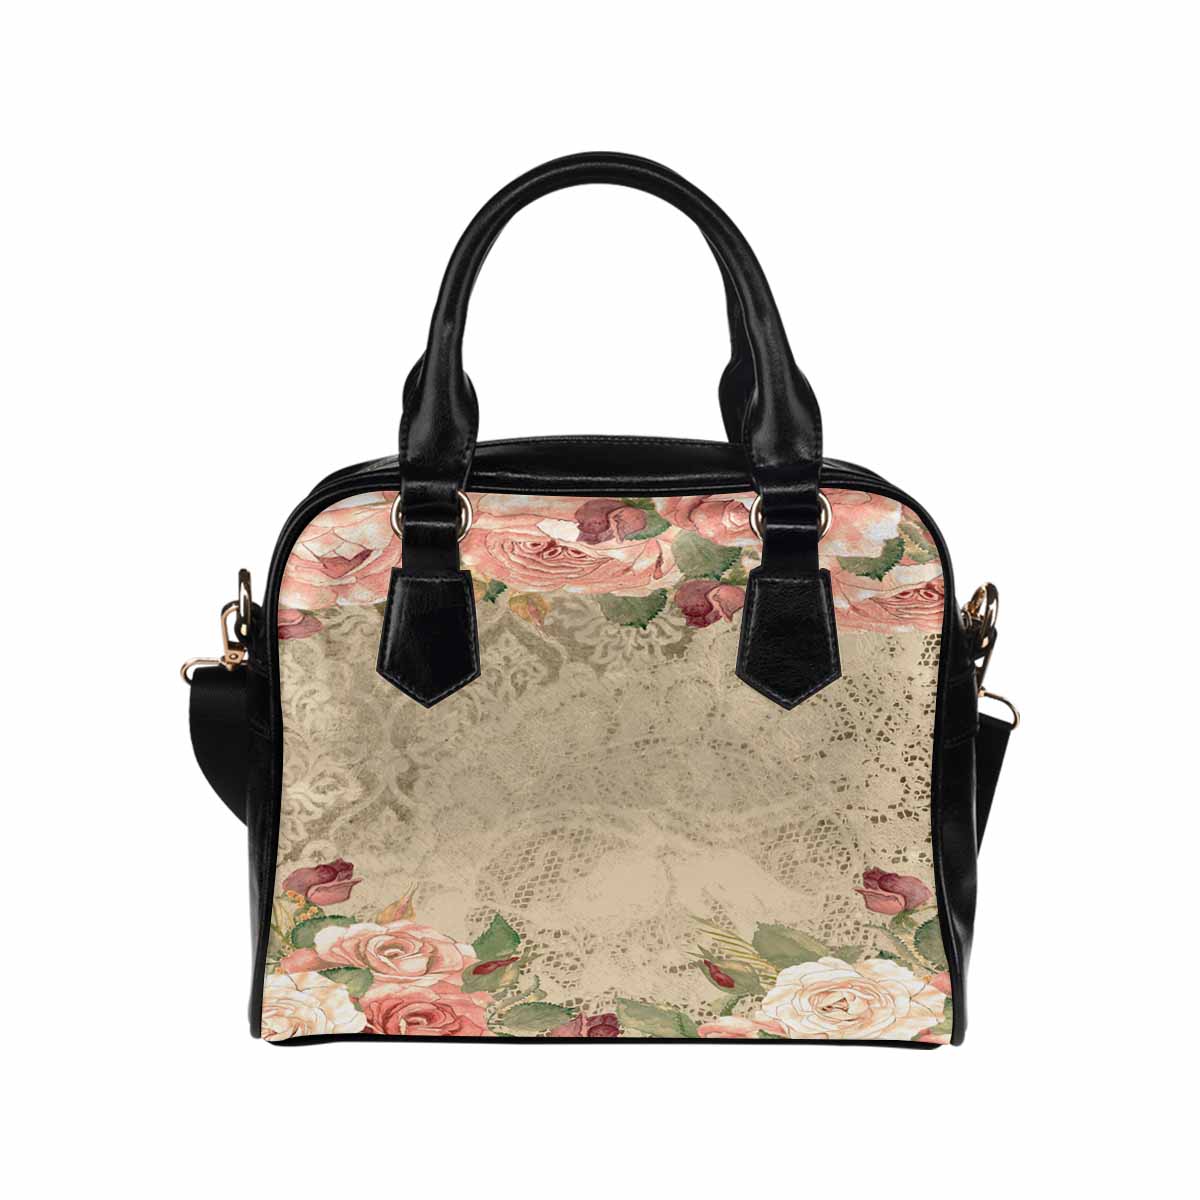 Victorian lace print, cute handbag, Mod 19163453, design 25